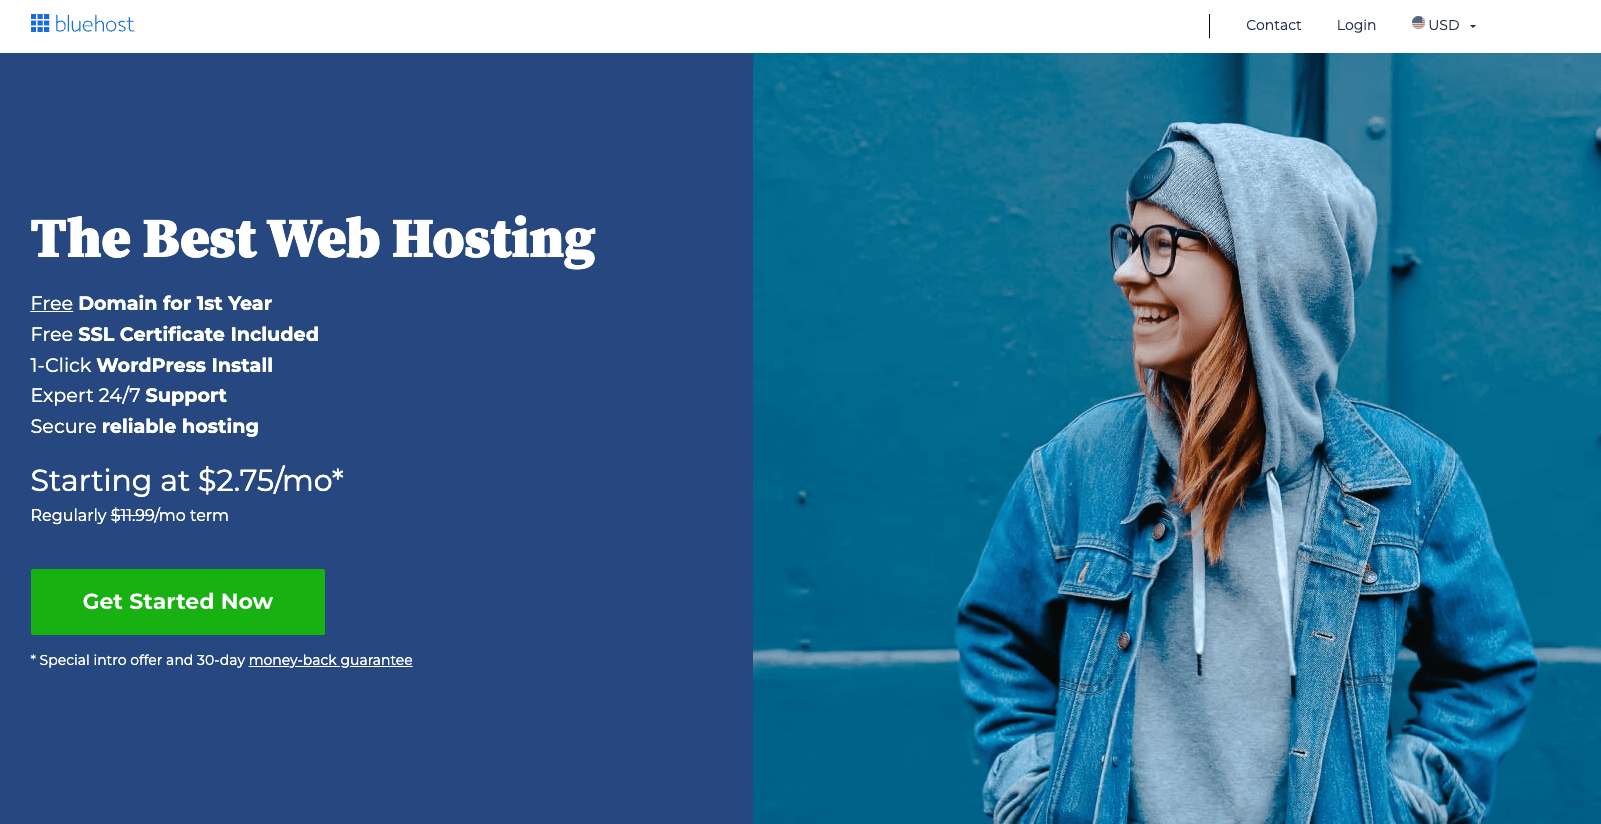 Cheap web hosting: Bluehost.